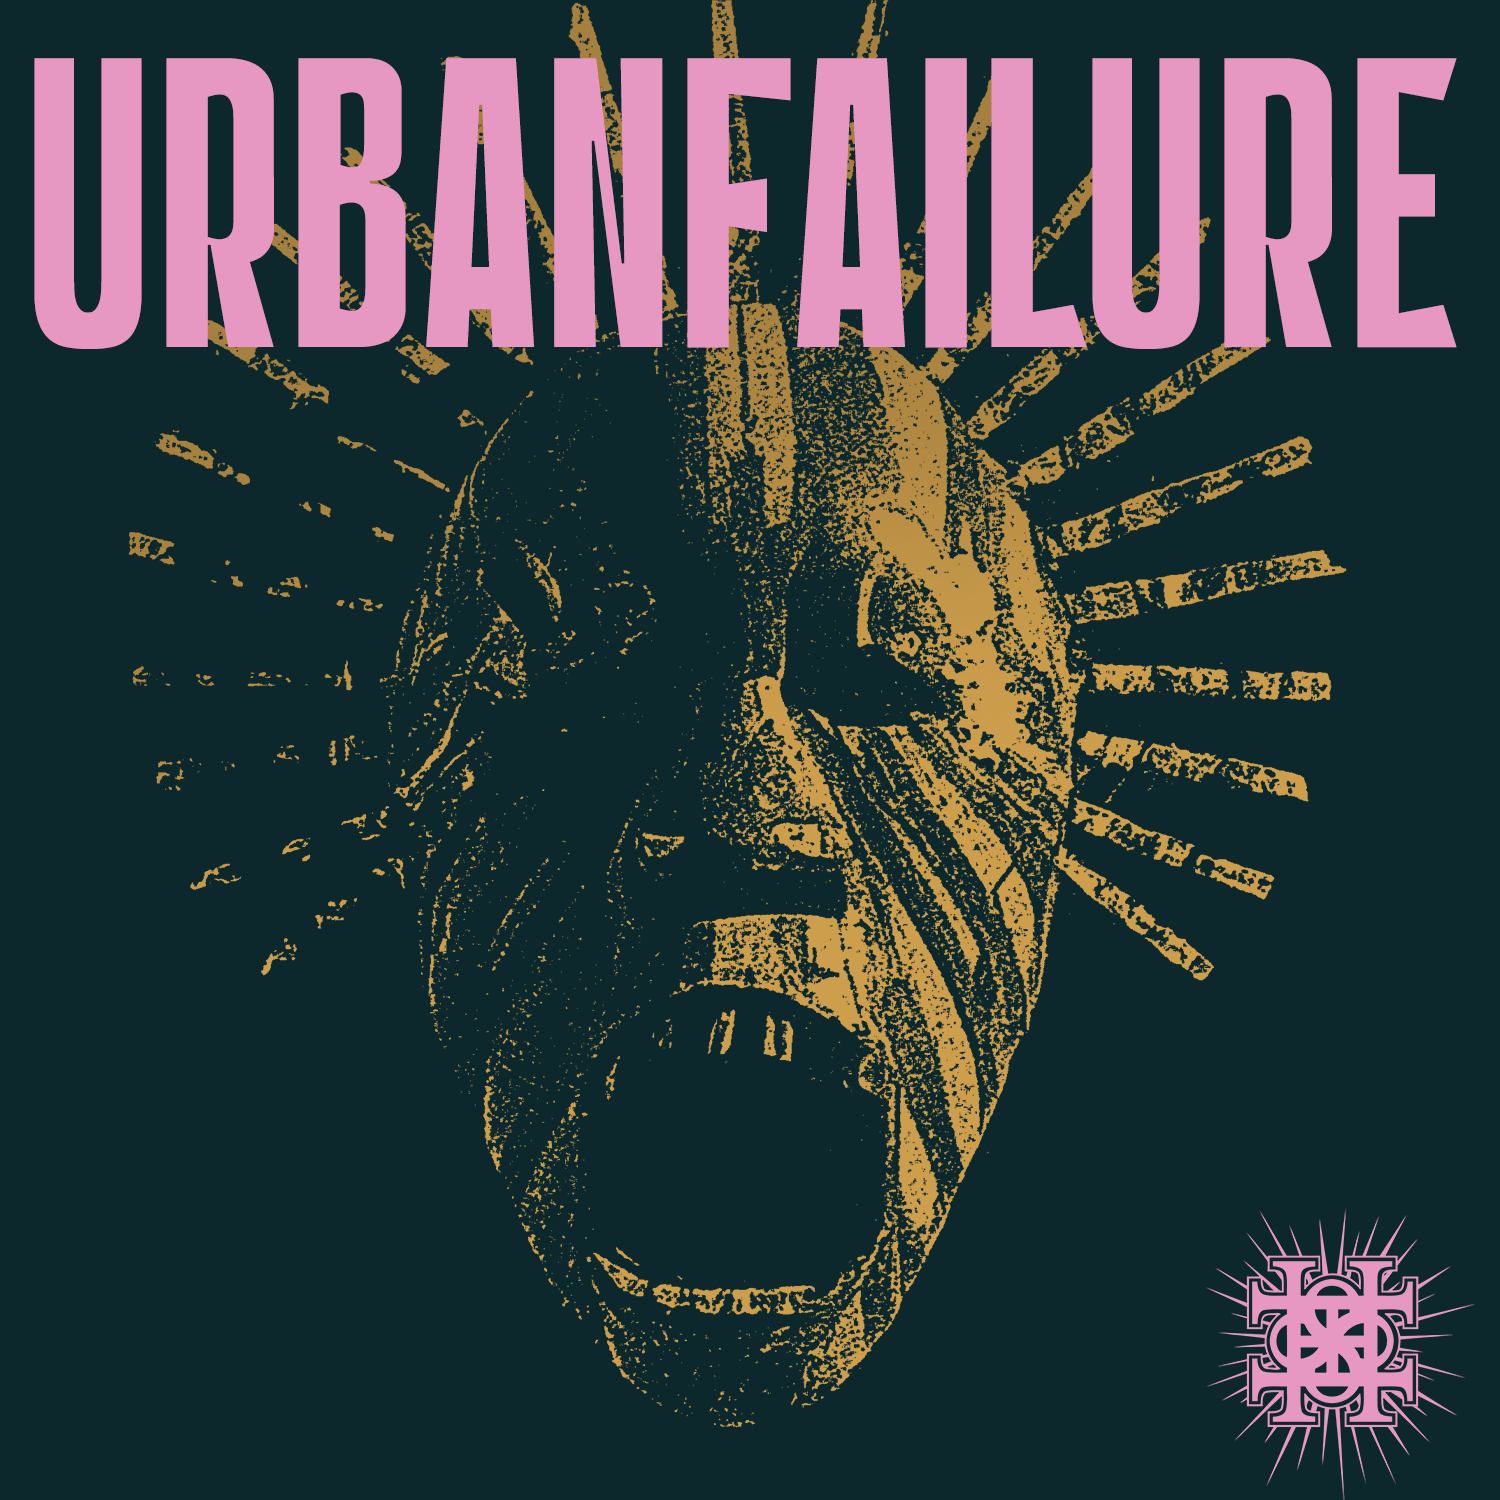 Urbanfailure will play live @Hradby Samoty